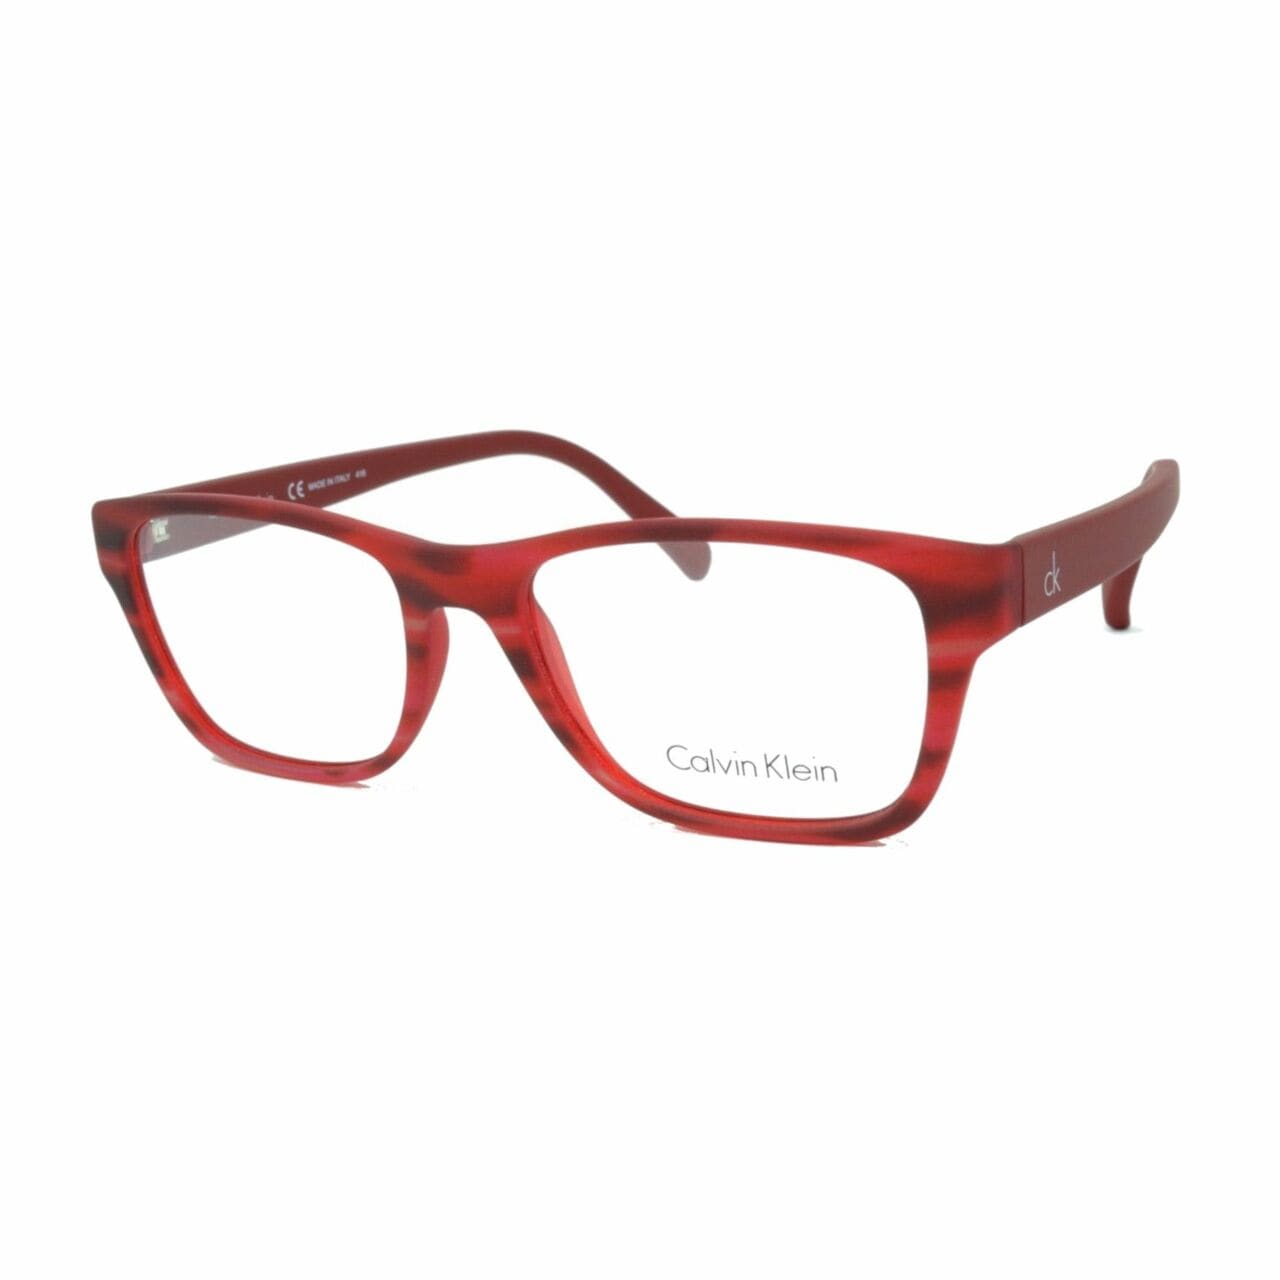 Calvin Klein CK-5957-615 Red Rectangular Unisex Plastic Eyeglasses 750779103692